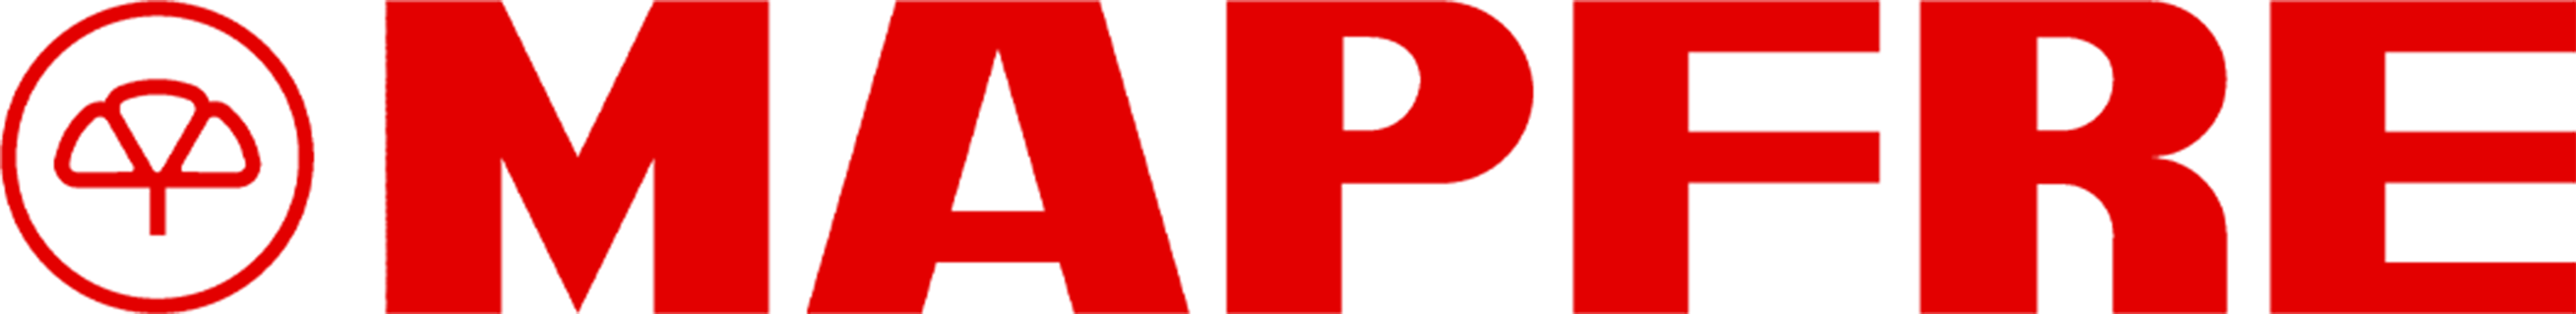 logo-Mapfre-rojo